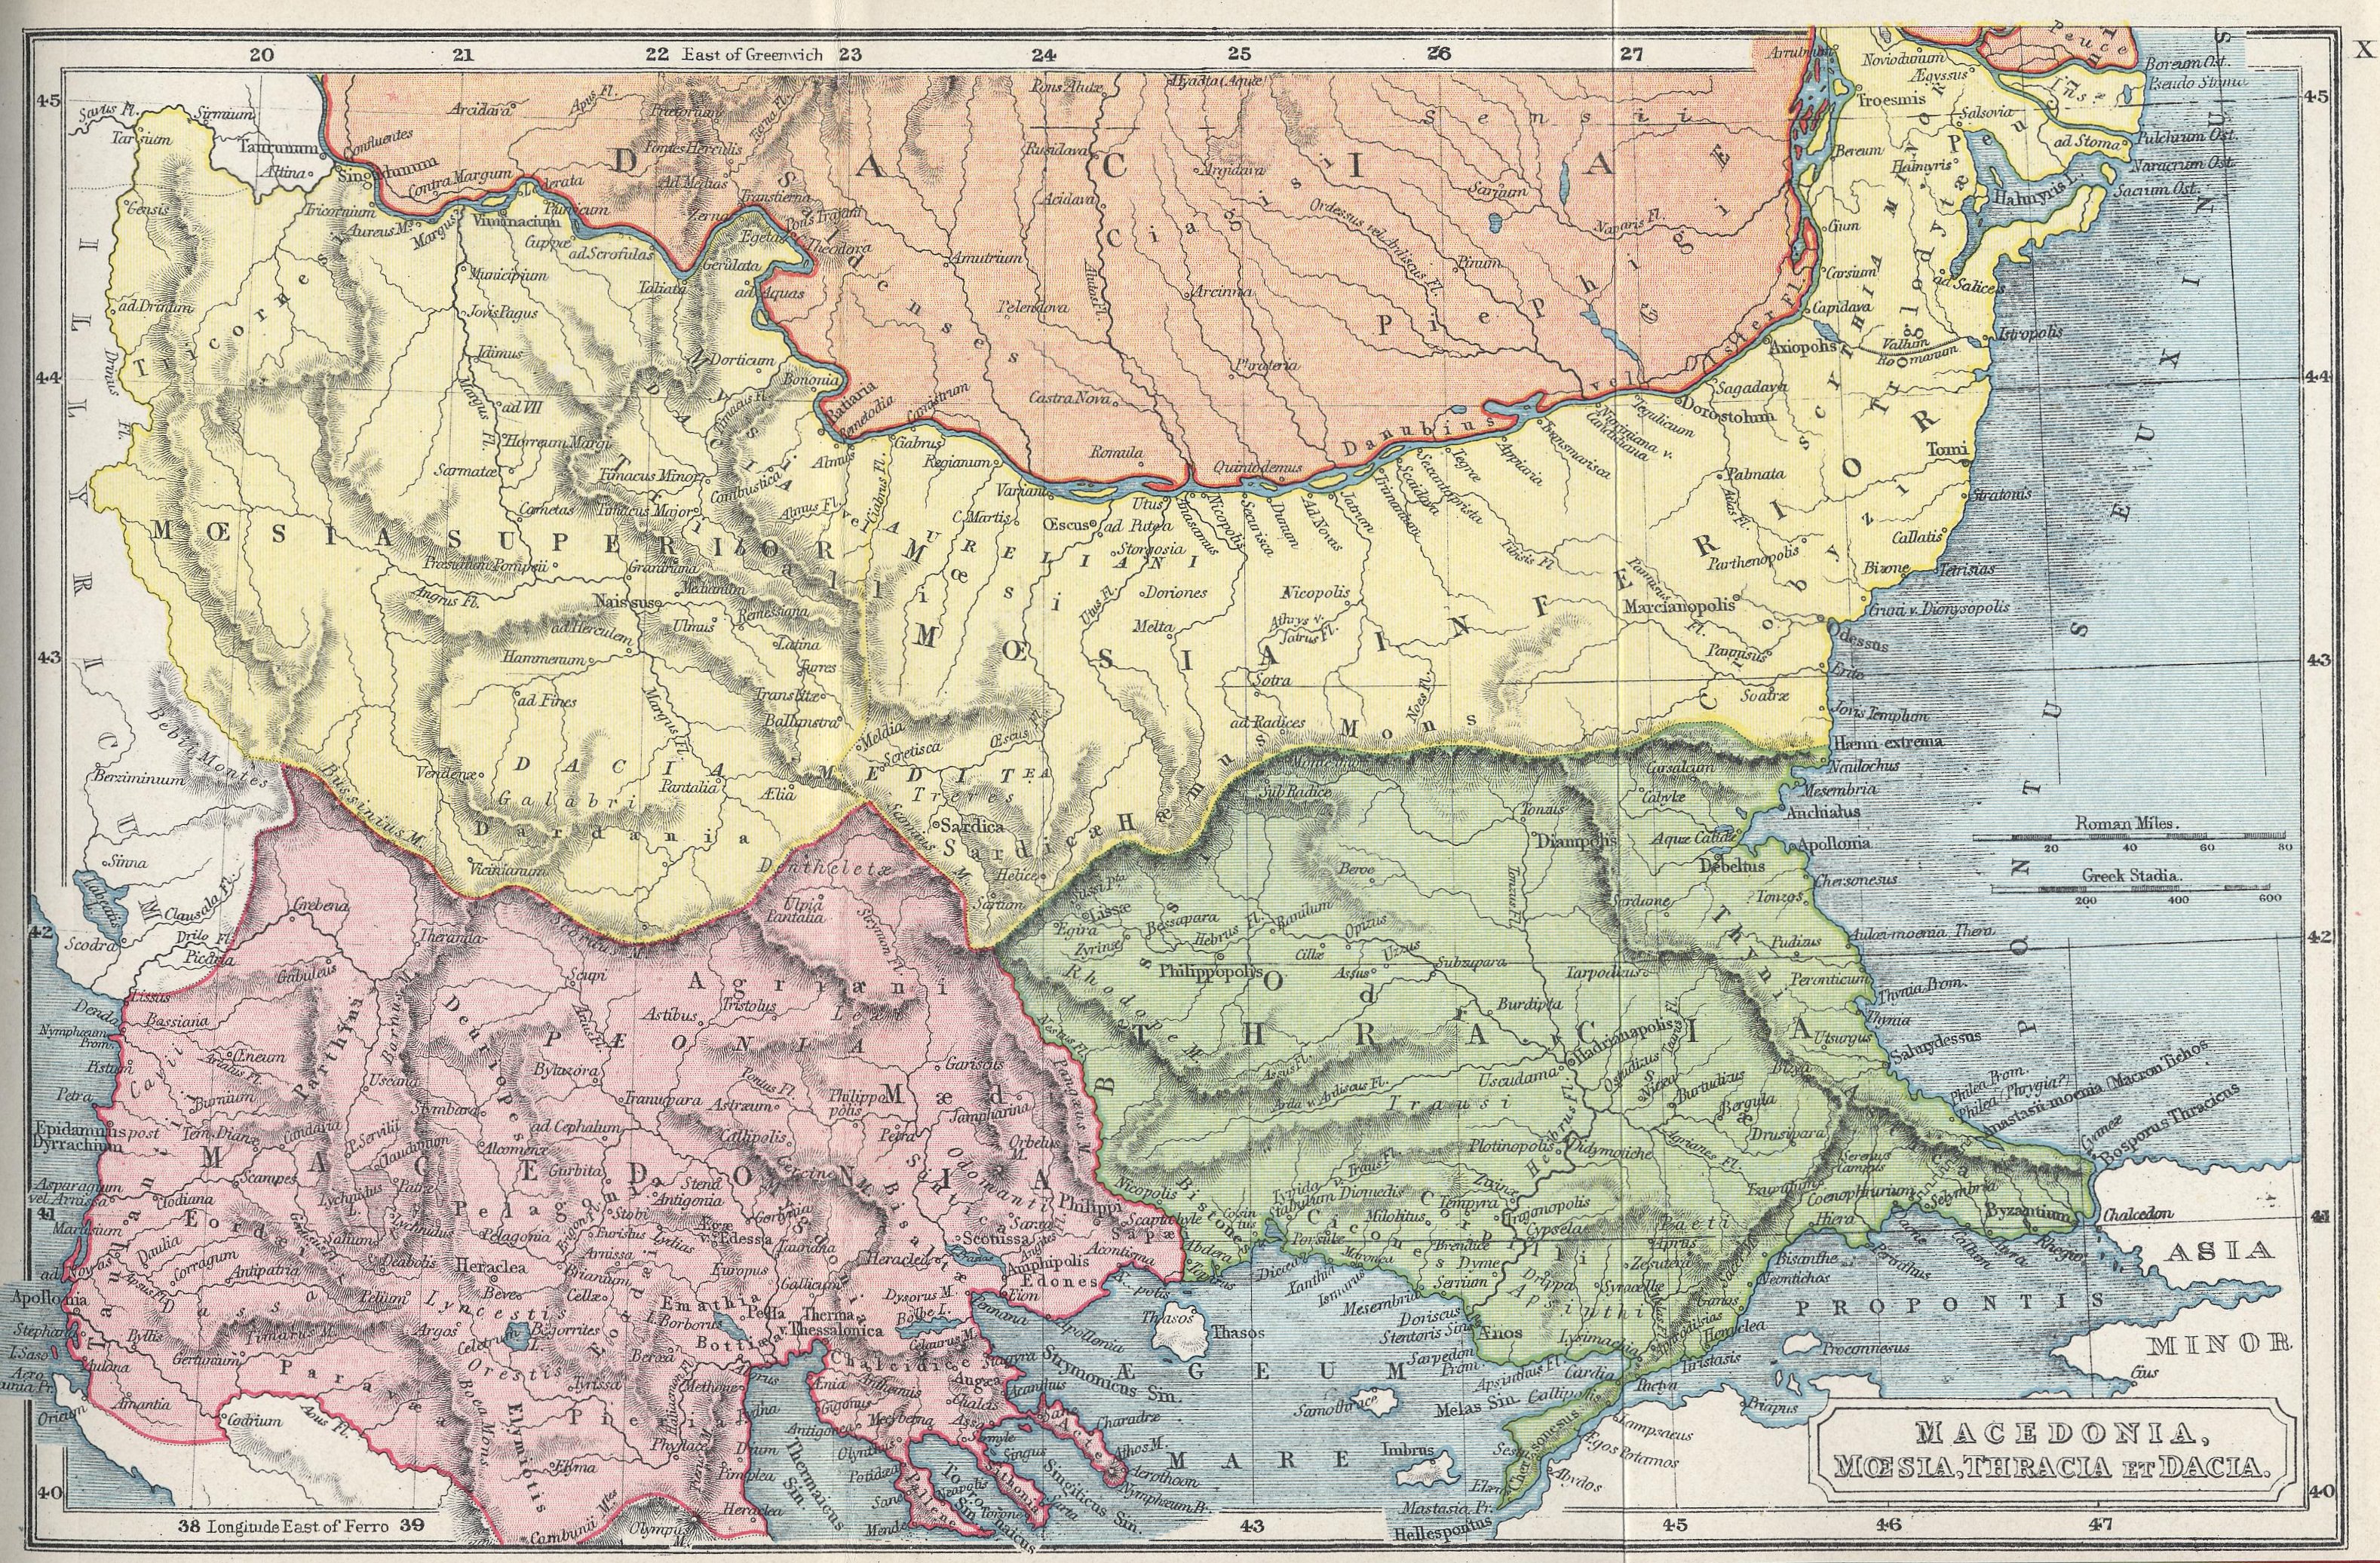 Map of Eastern Balkans 70 BC - AD 180